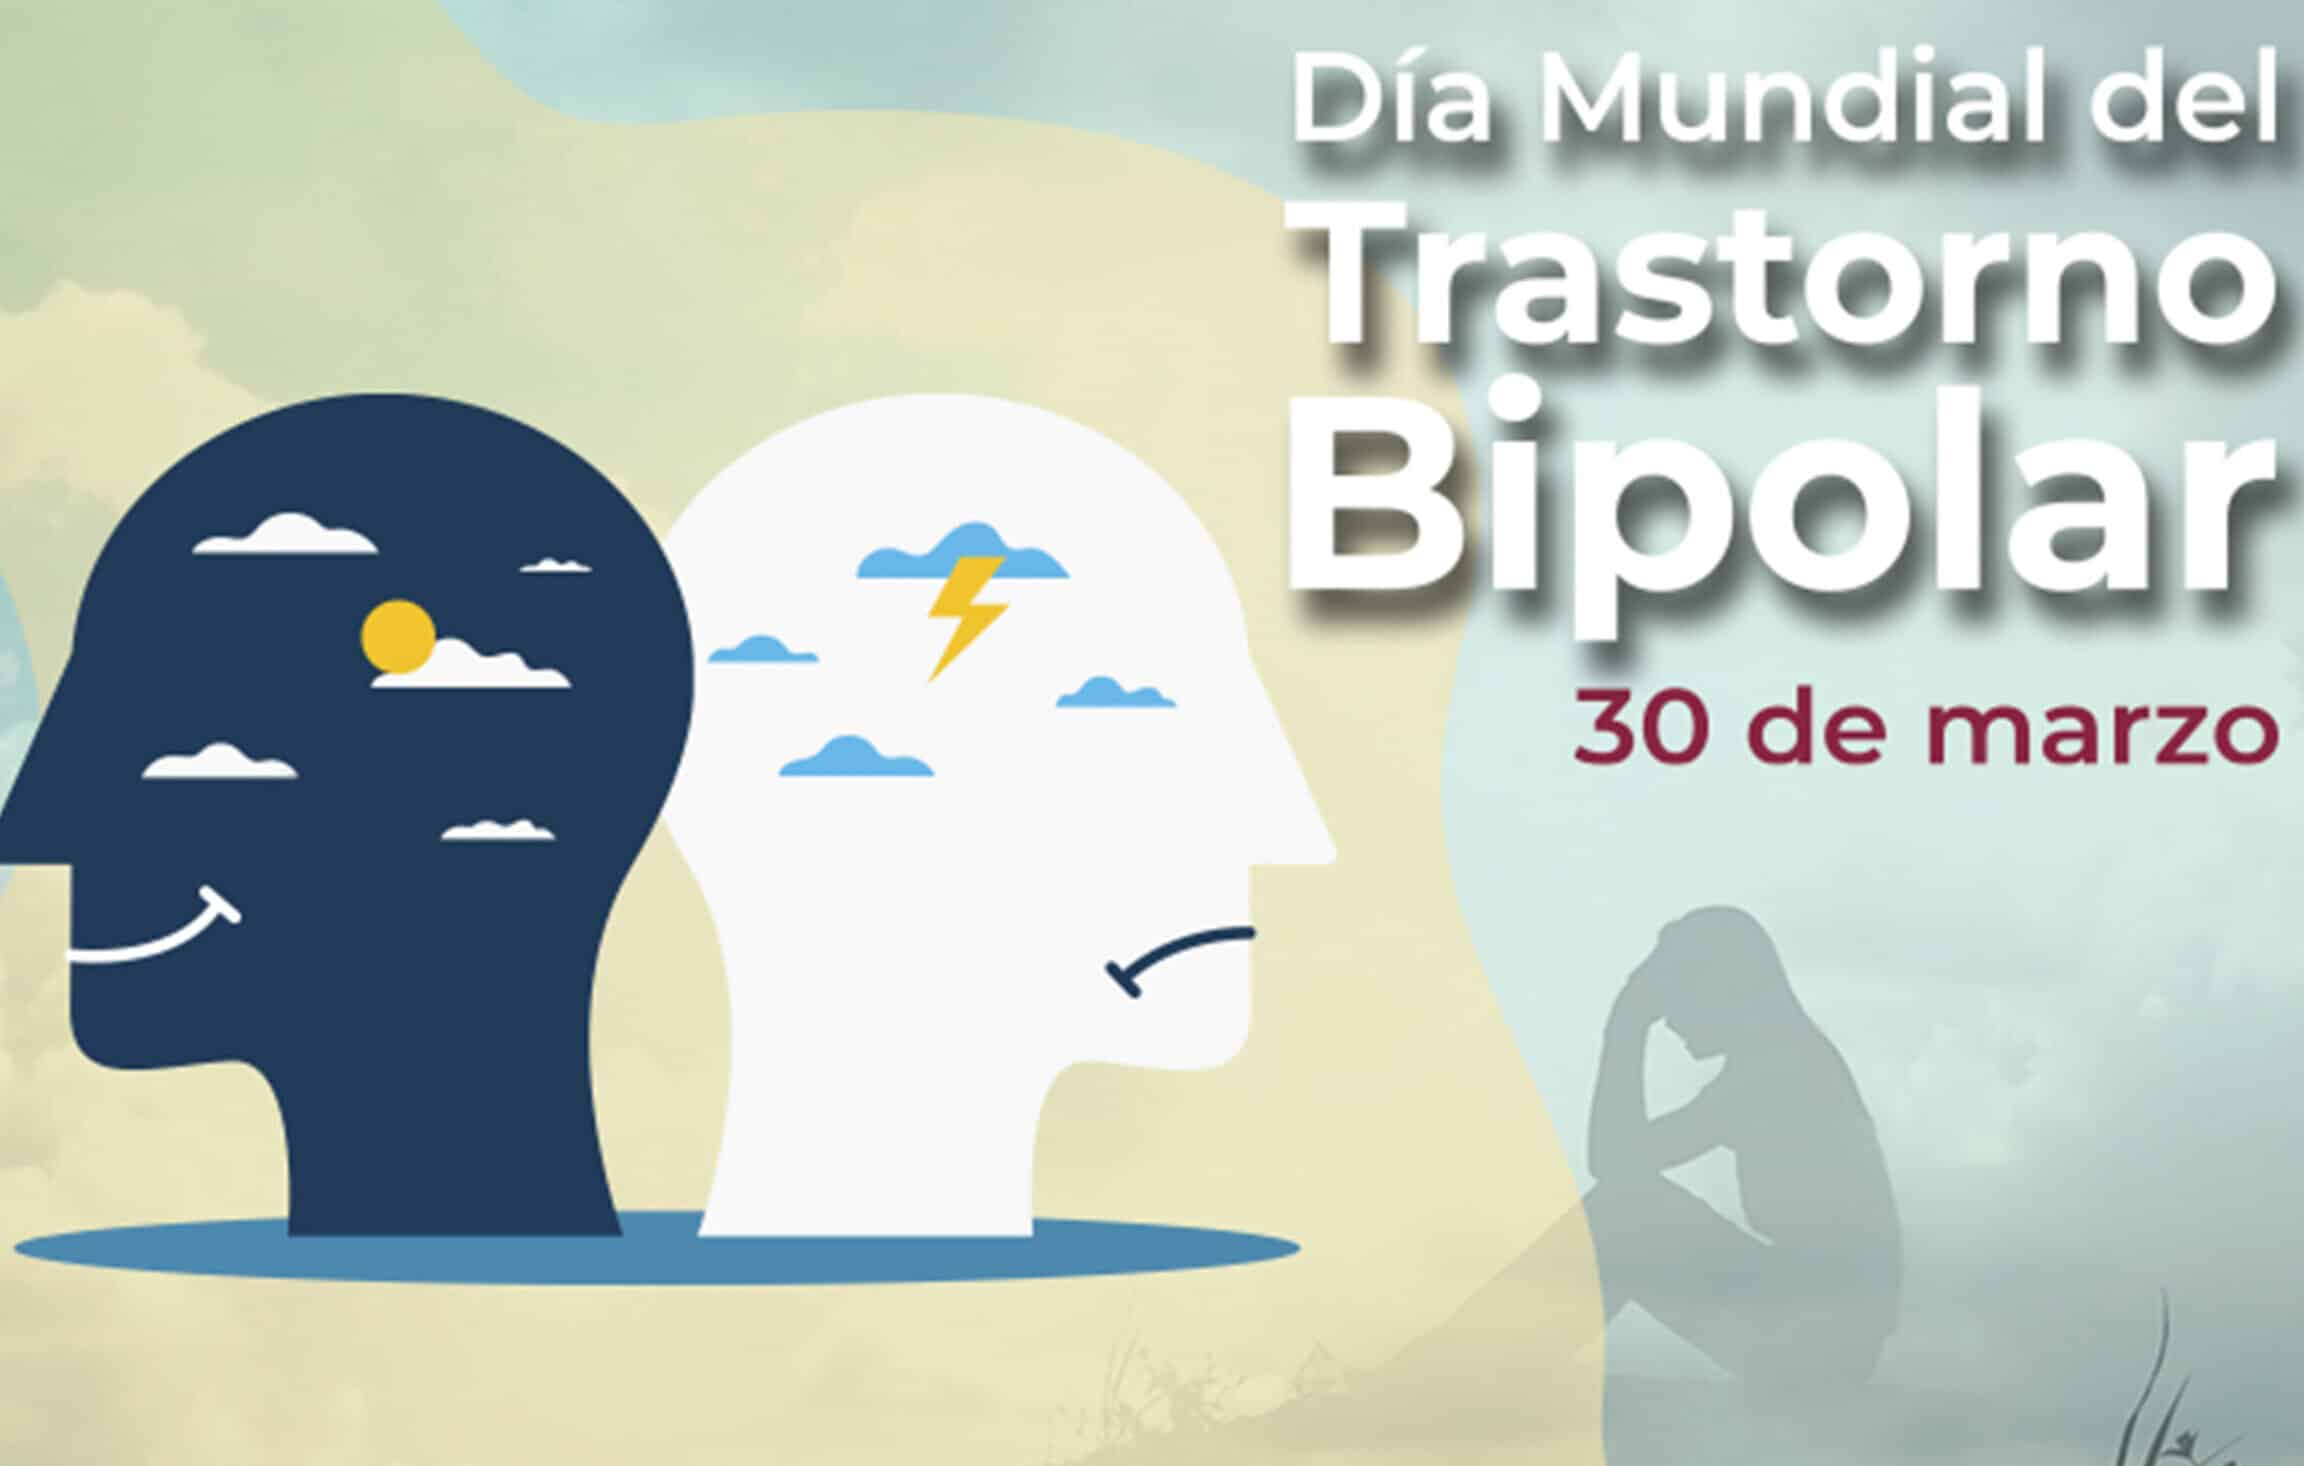 dia mundial del trastorno bipolar 30 de marzo